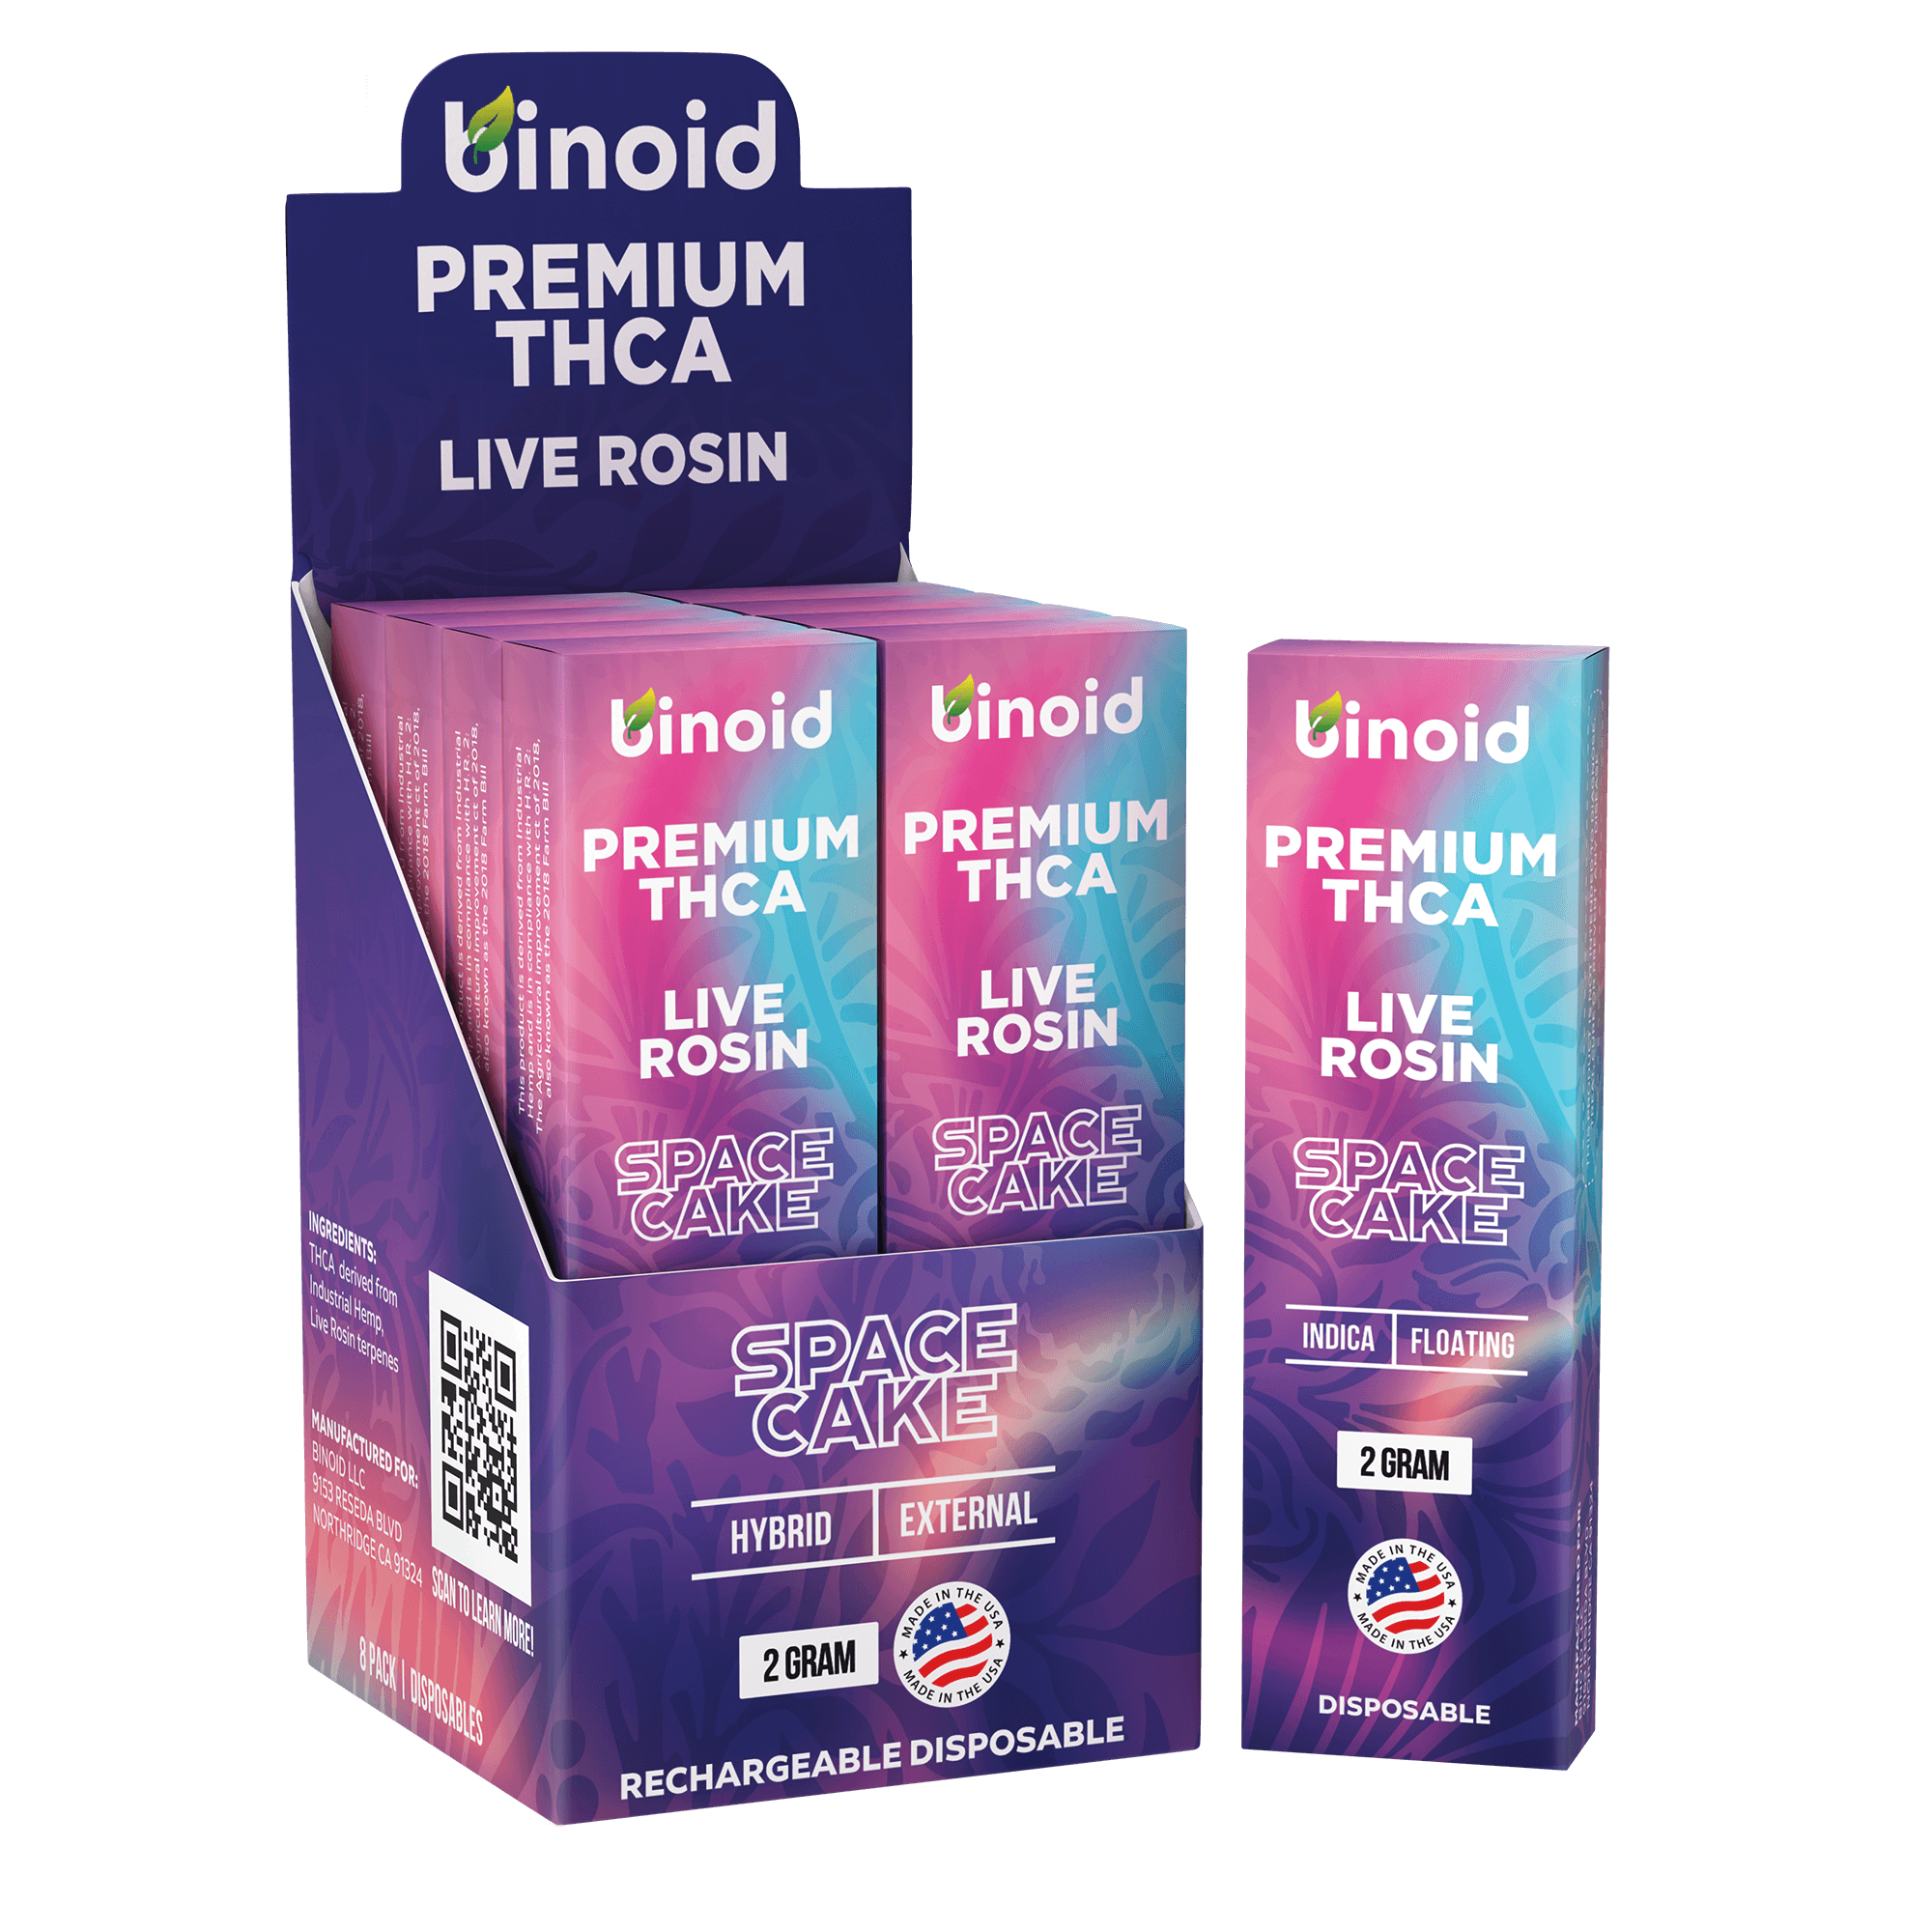 Binoid 2 Gram THCA Disposable Vapes – Live Rosin Best Price